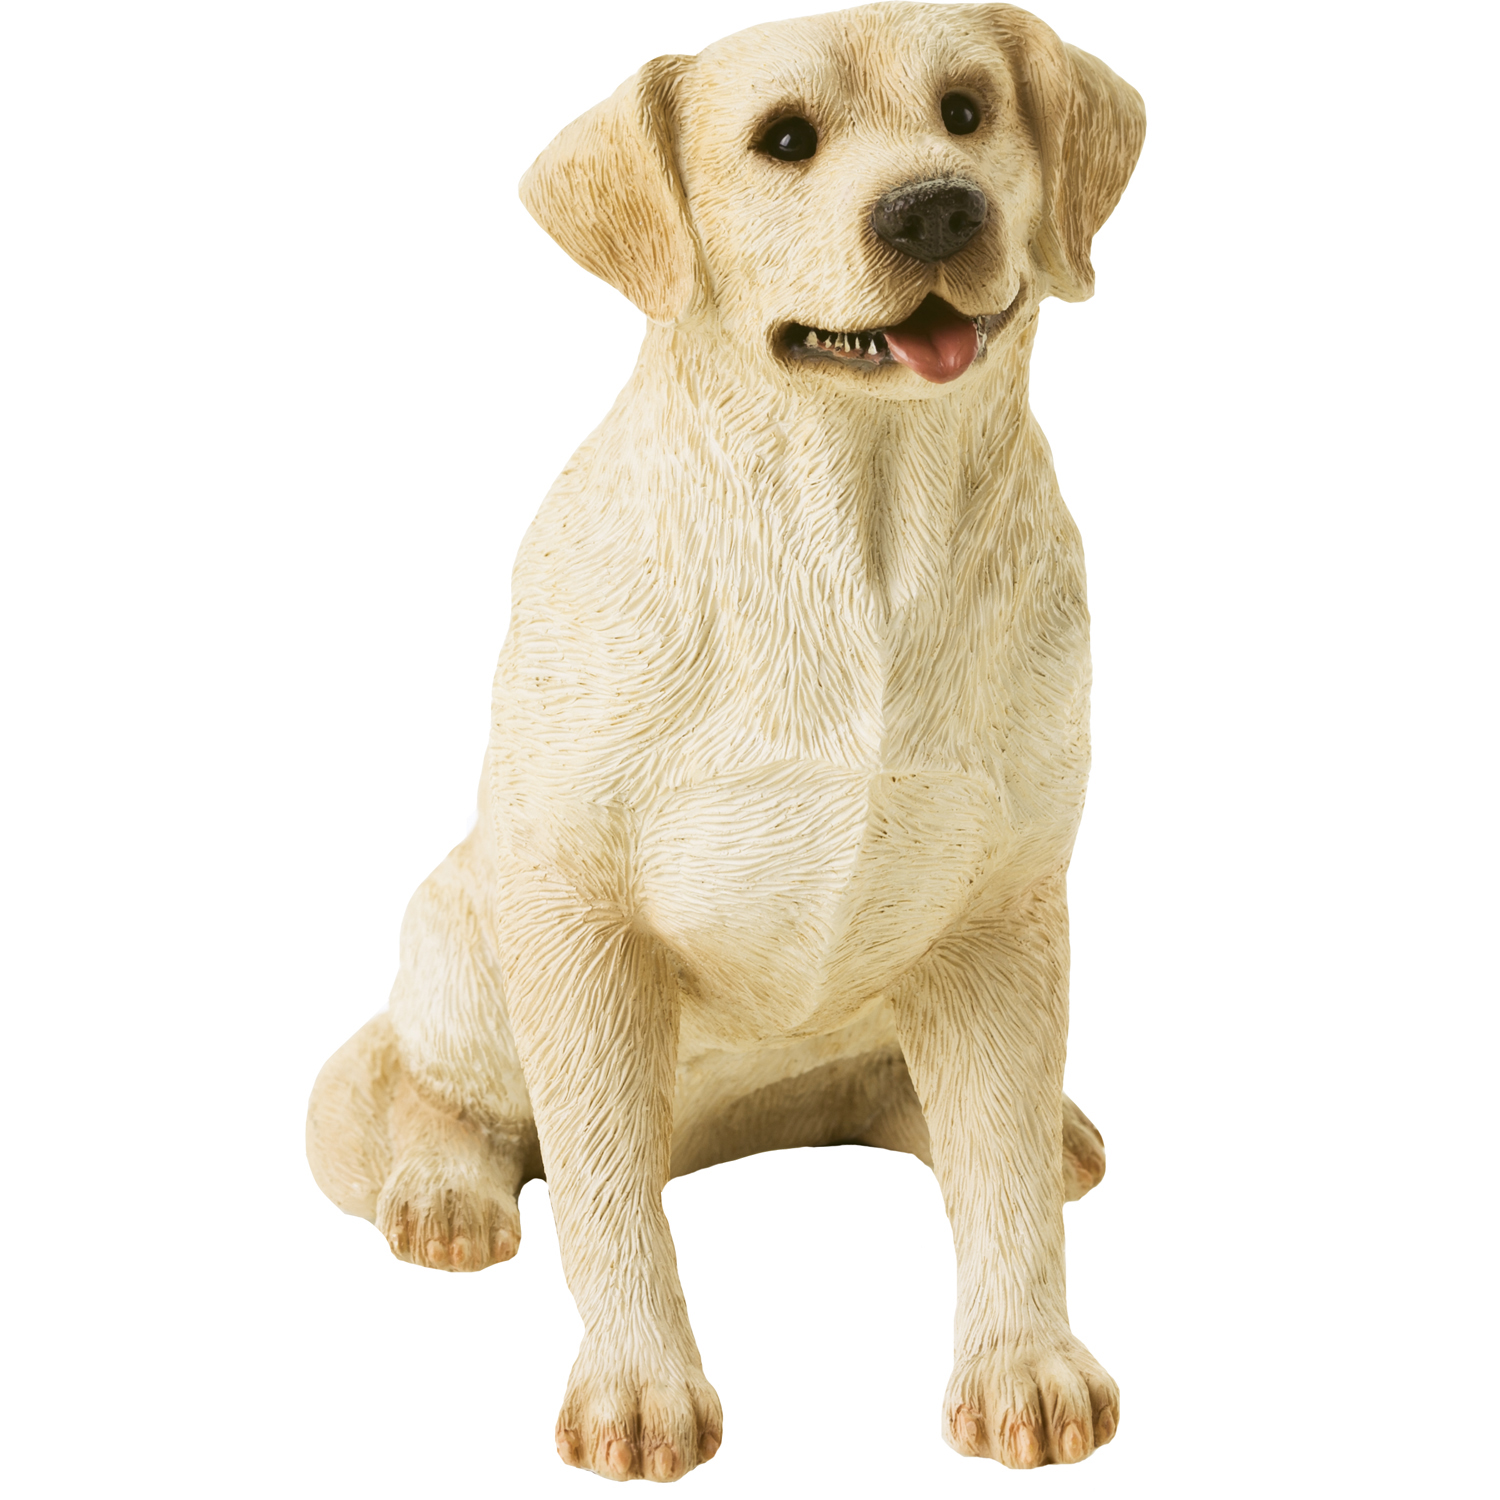 Sandicast "Mid Size" Sitting Yellow Labrador Retriever Dog Sculpture - image 1 of 2